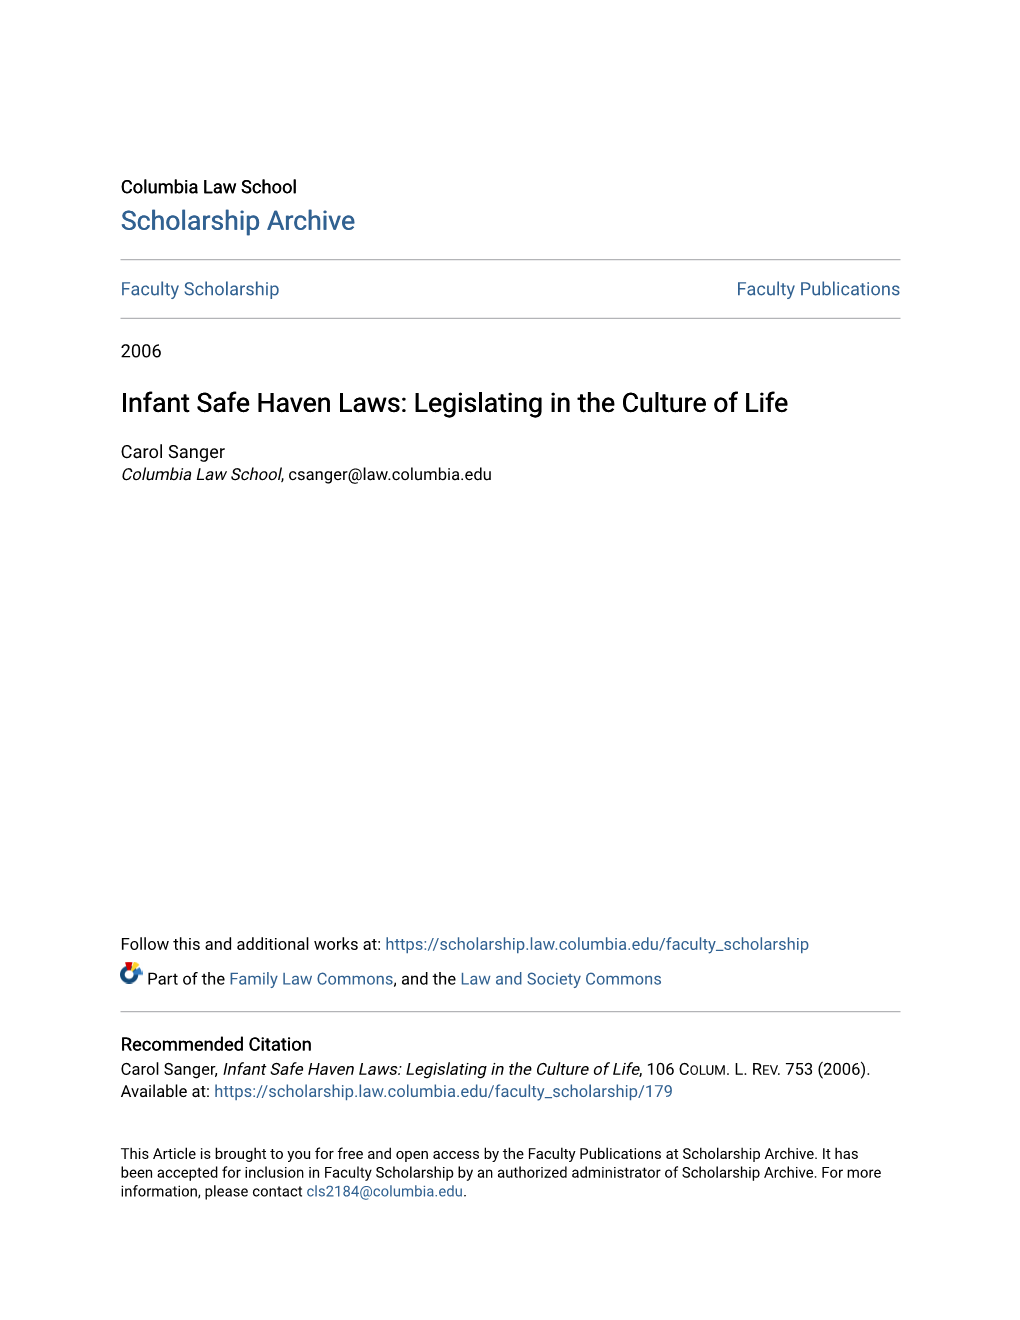 Infant Safe Haven Laws: Legislating in the Culture of Life